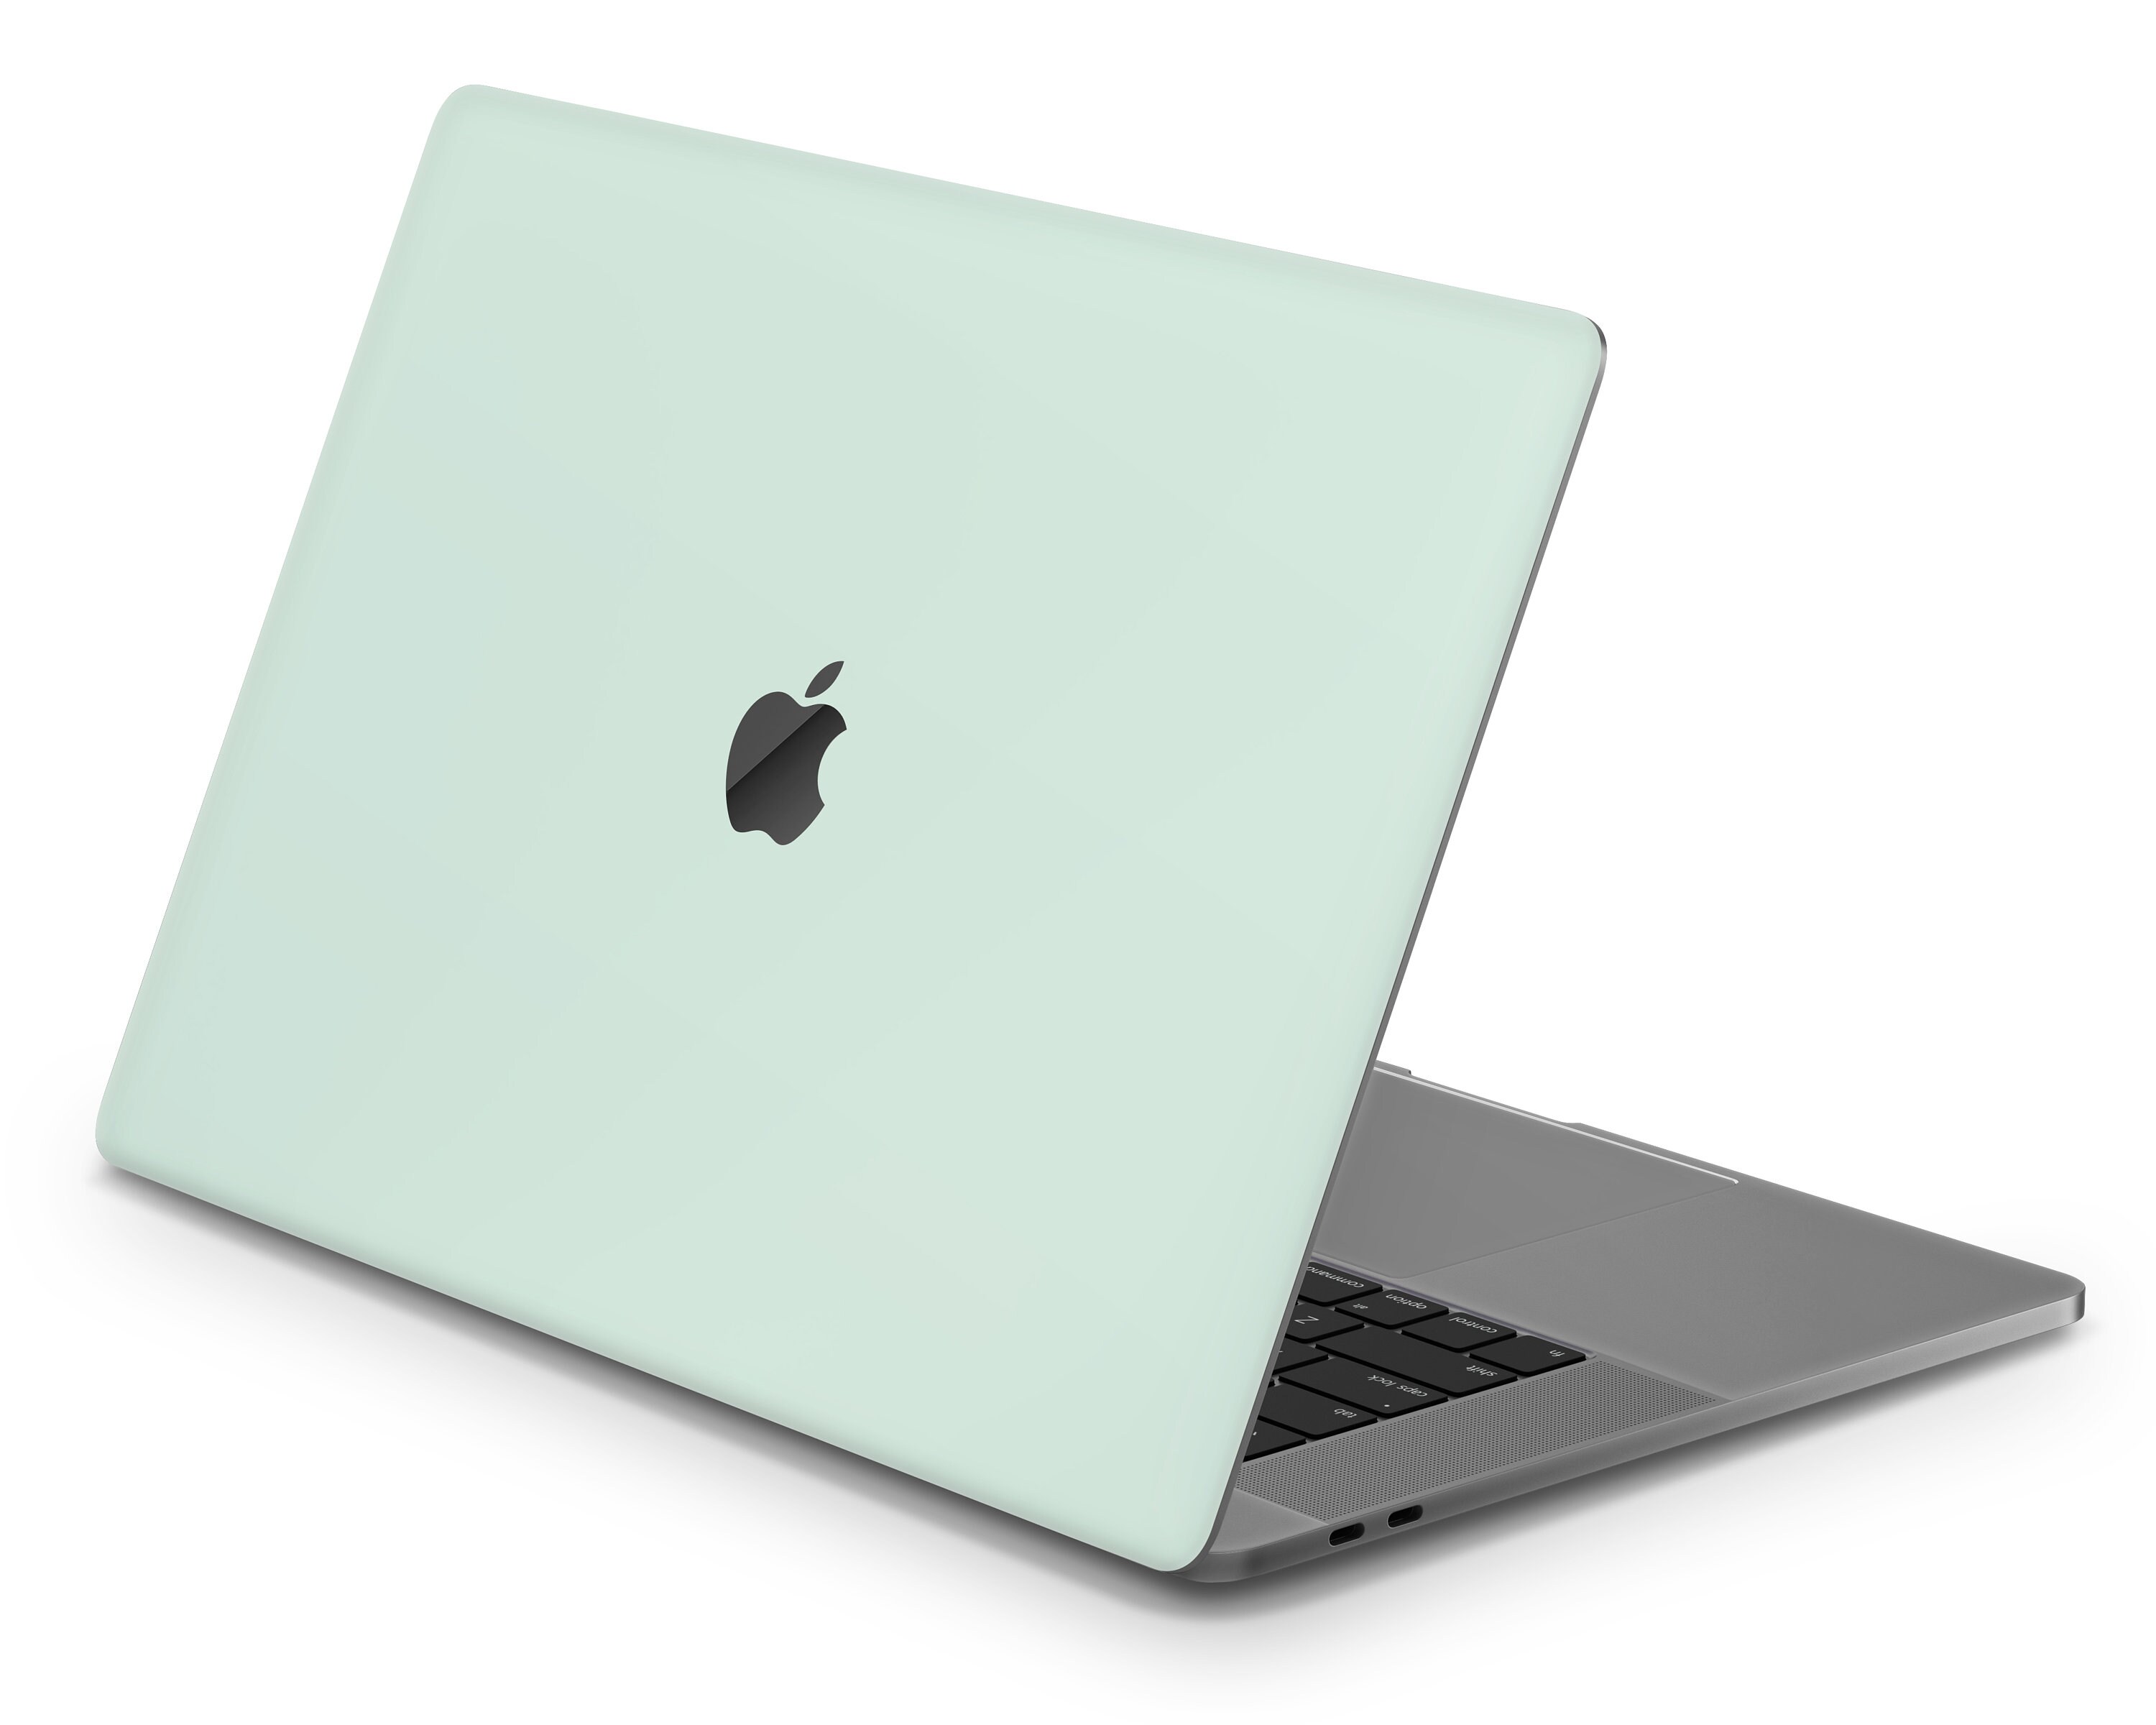 Pastele Kermit Supreme MacBook Case Custom Personalized Smart Protective  Cover for MacBook MacBook Pro MacBook Pro